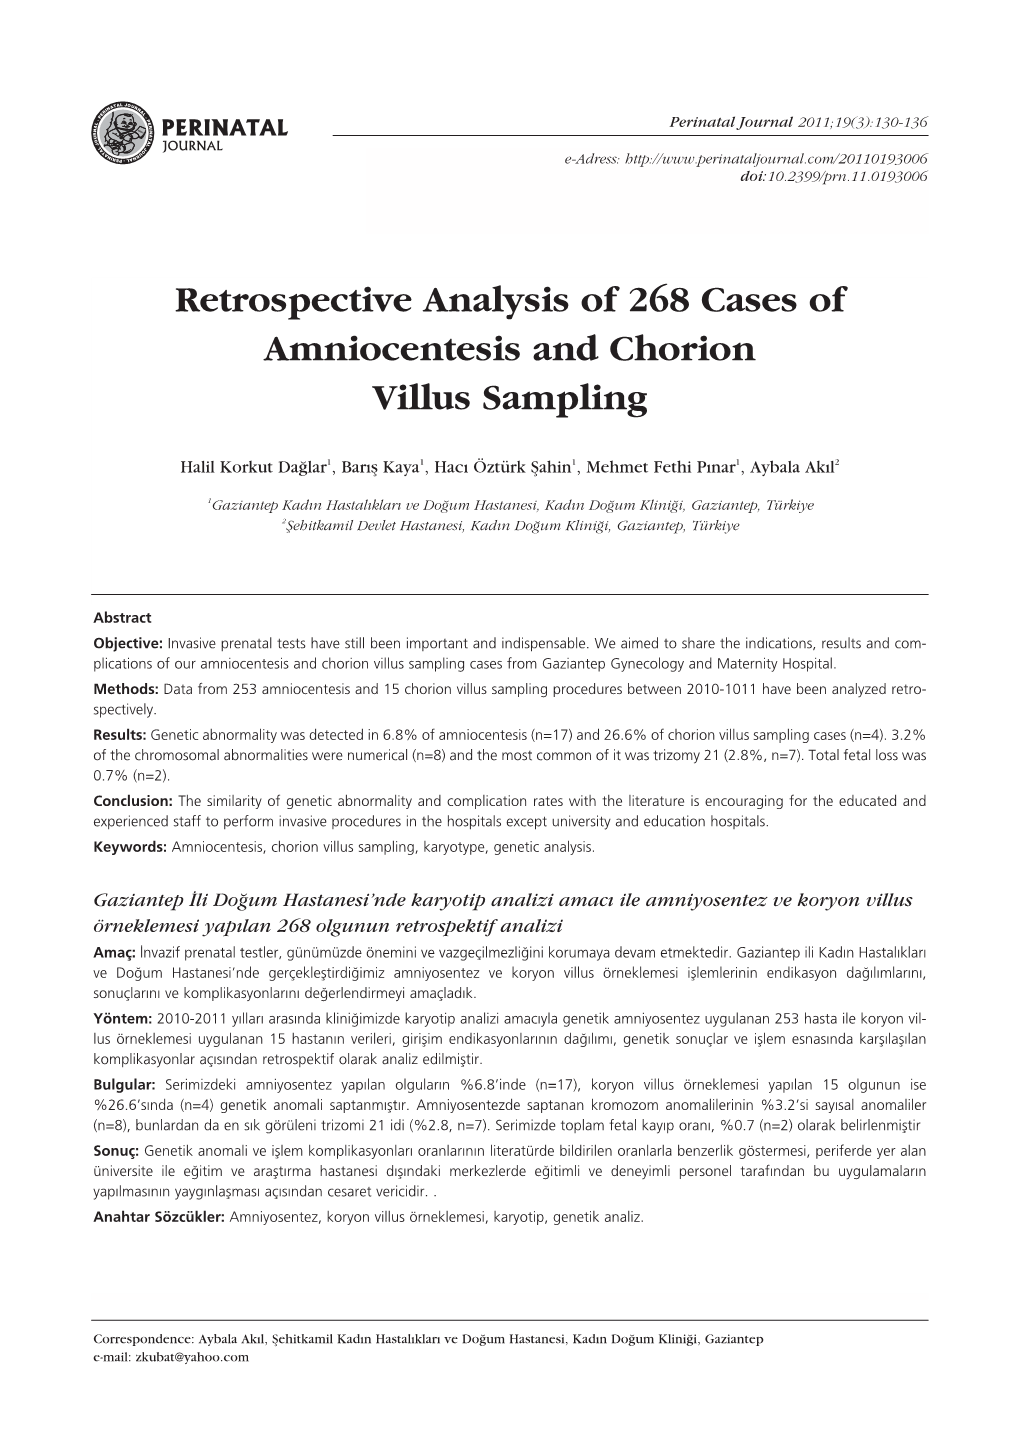 Retrospective Analysis of 268 Cases of Amniocentesis and Chorion Villus Sampling